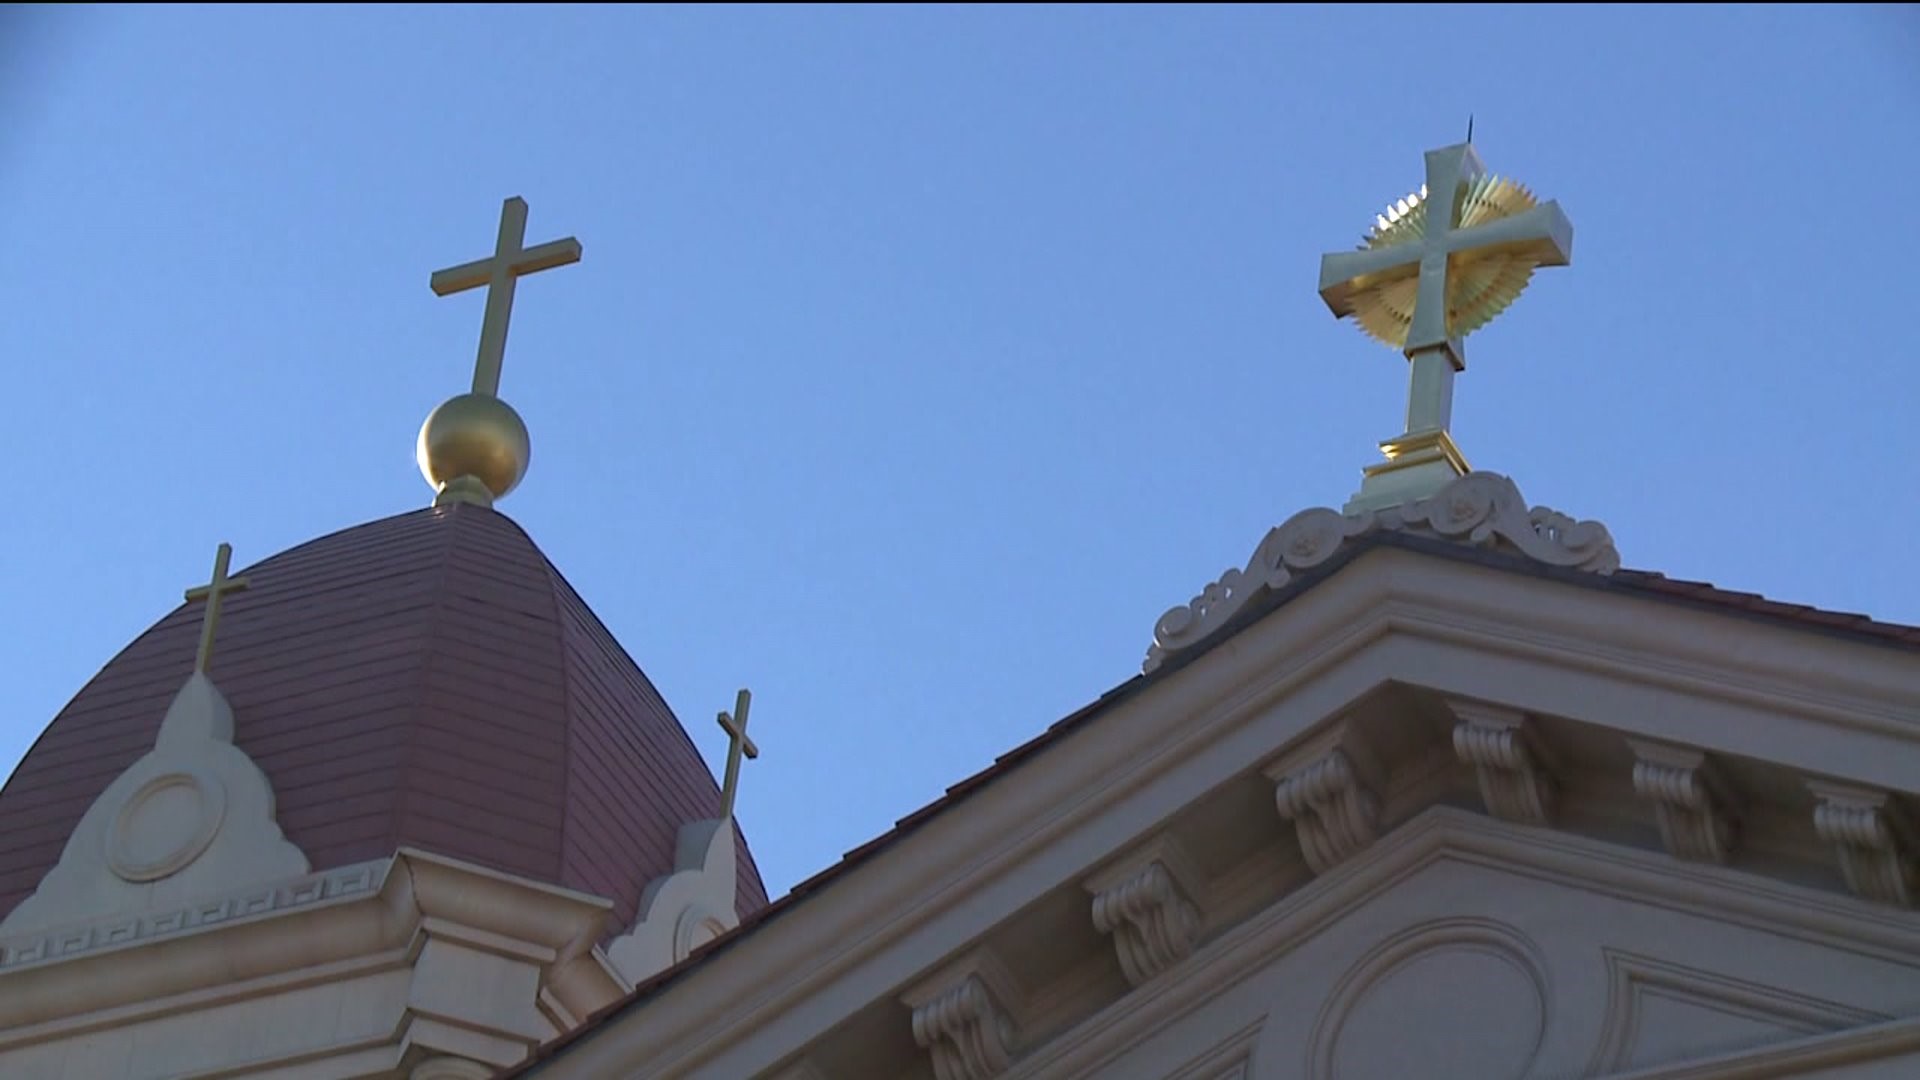 Alleged Victims Plan Lawsuit Against Diocese of Scranton Bishops